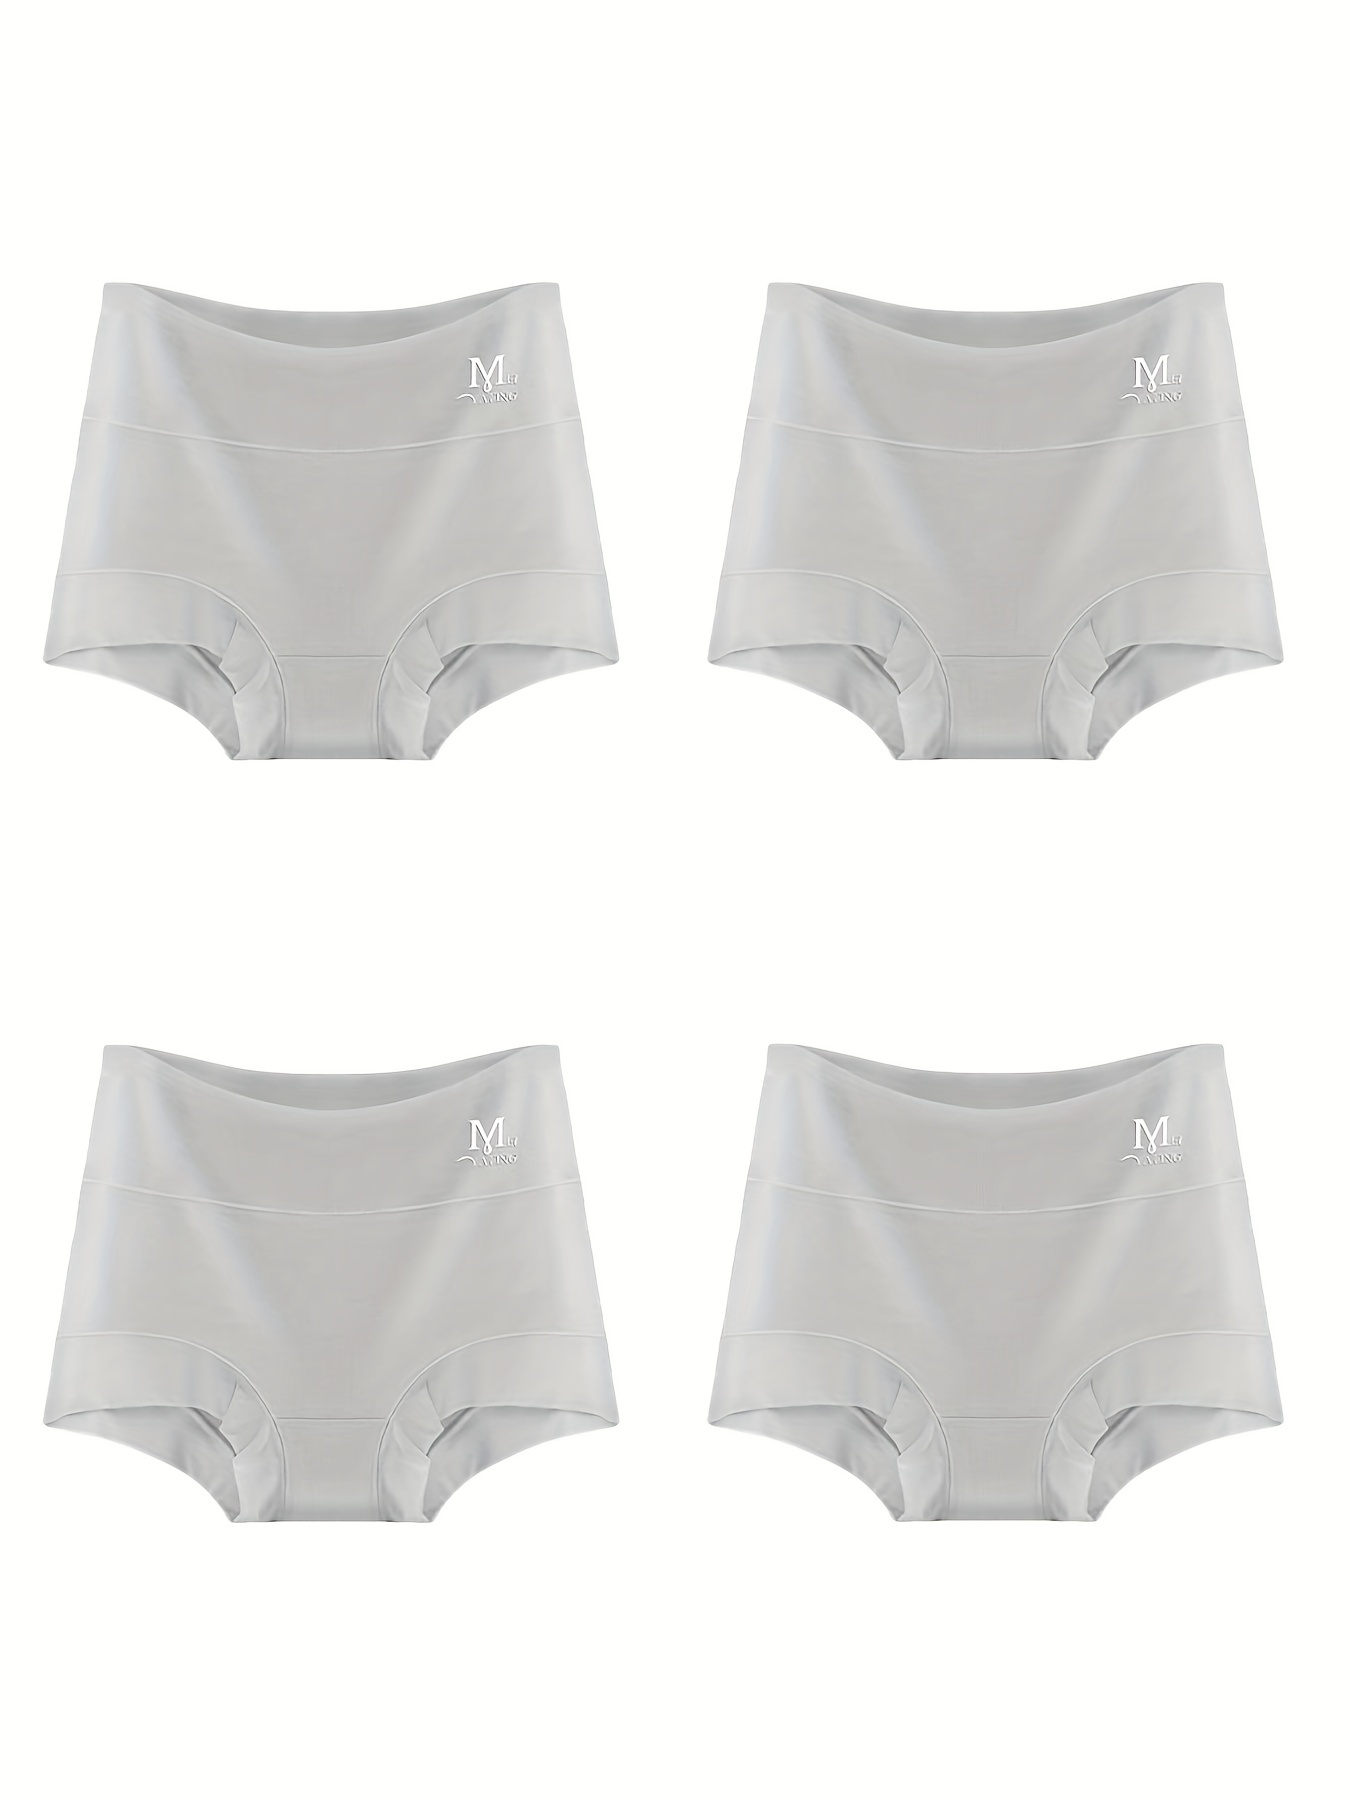 MIOTAN Women's Boyshort Underwear Cotton Boxer for Women Stretch High  Waisted Underpants Panties Soft Ladies Briefs 4 Pack